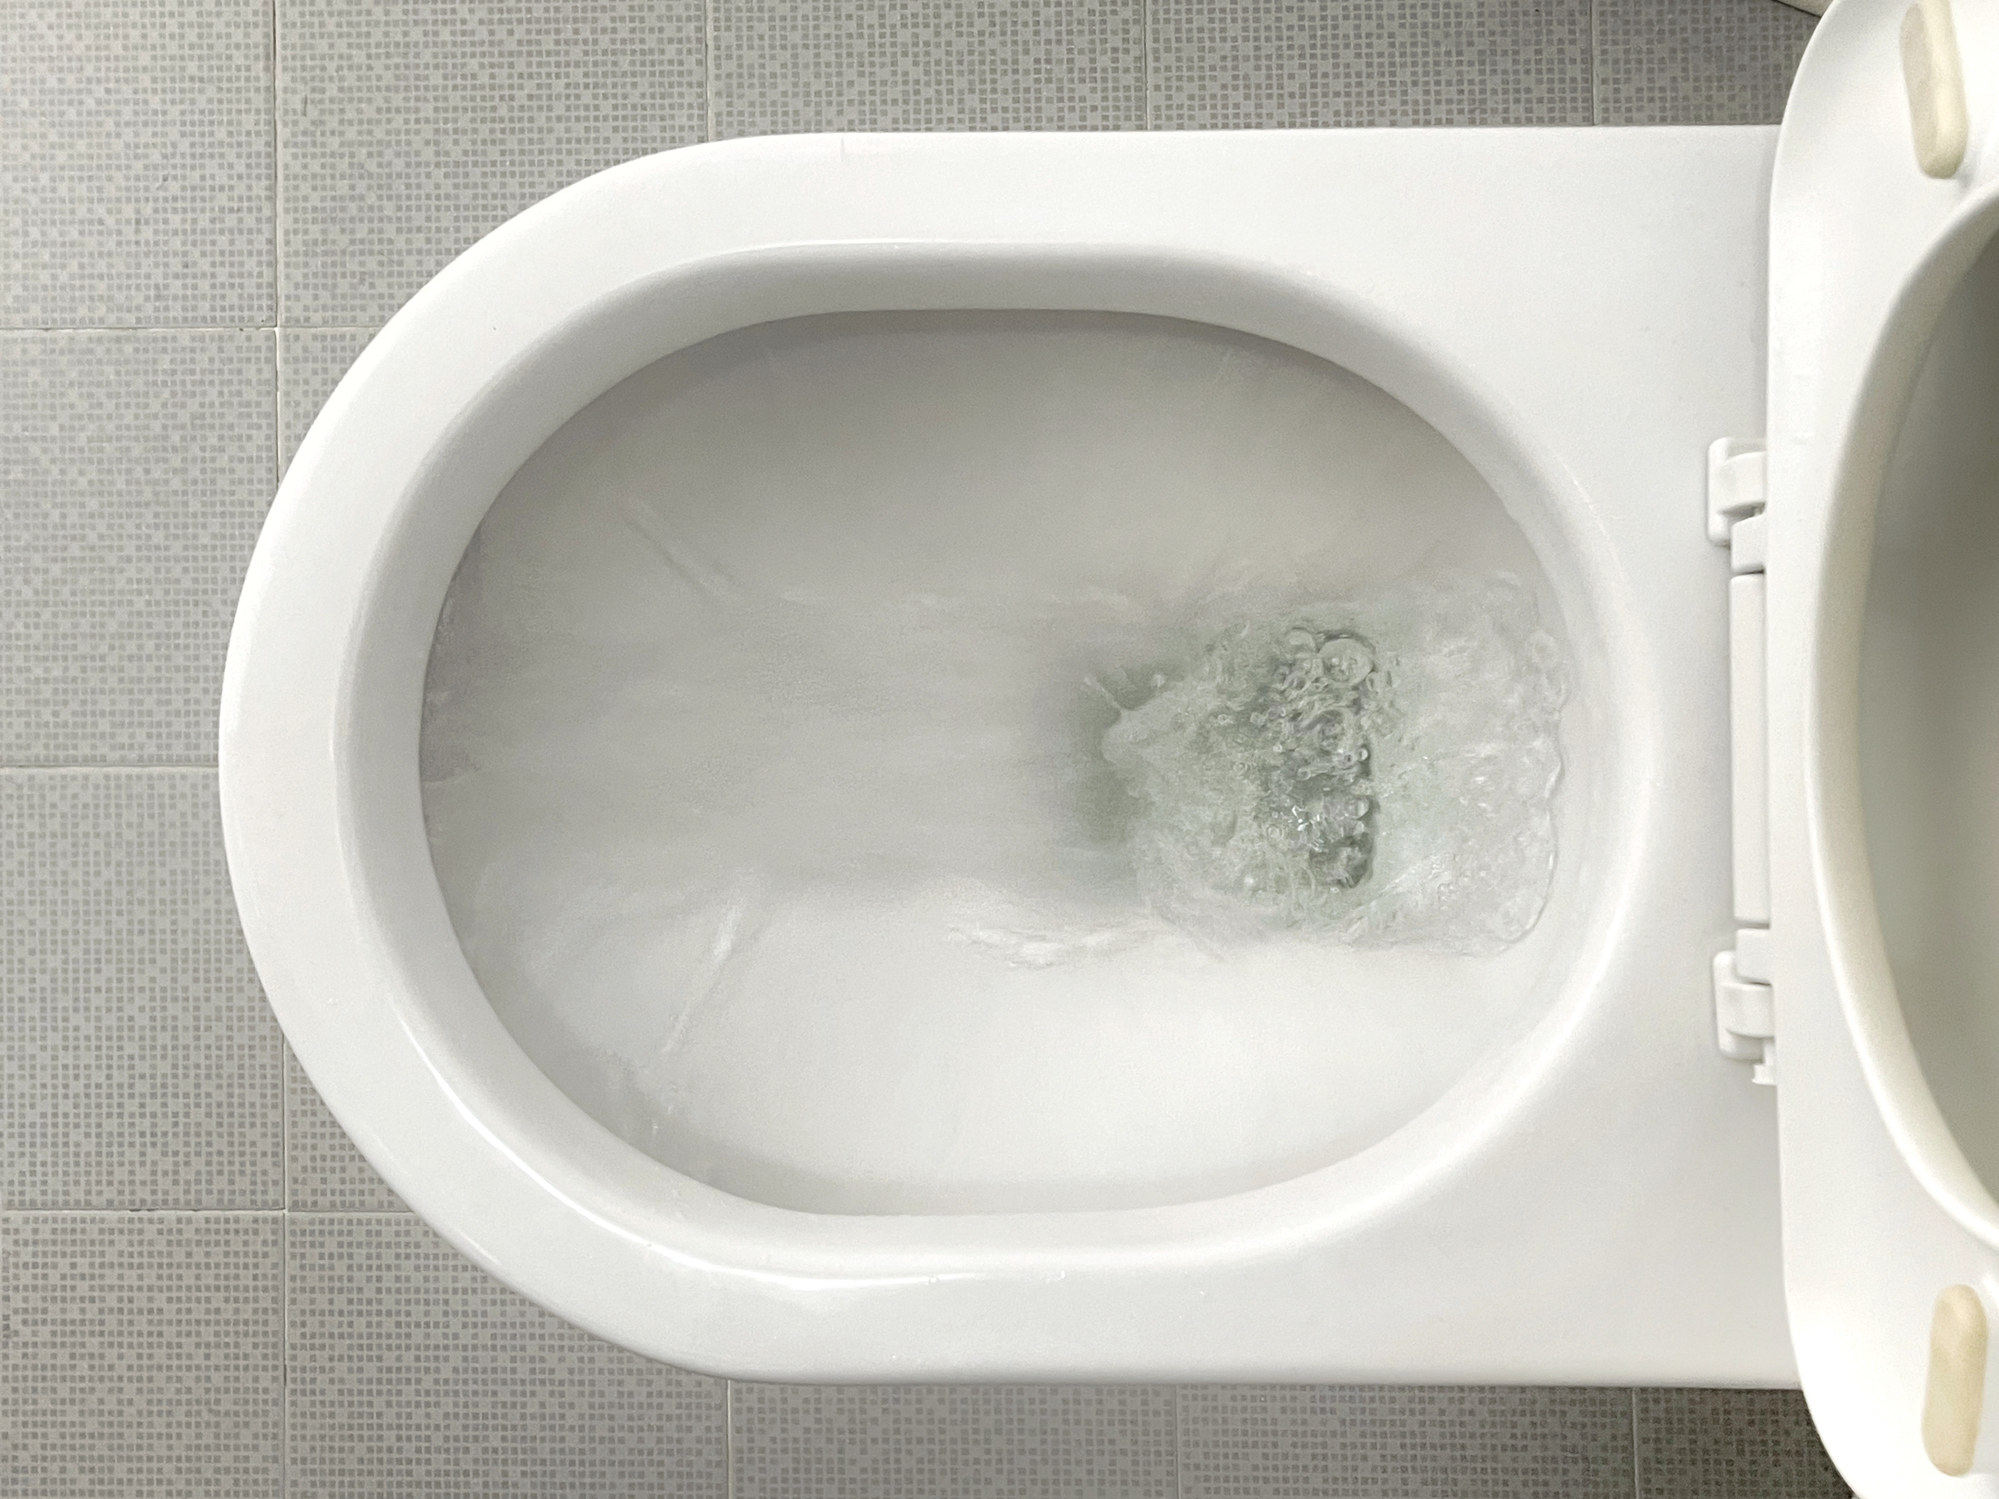 A toilet flushing.